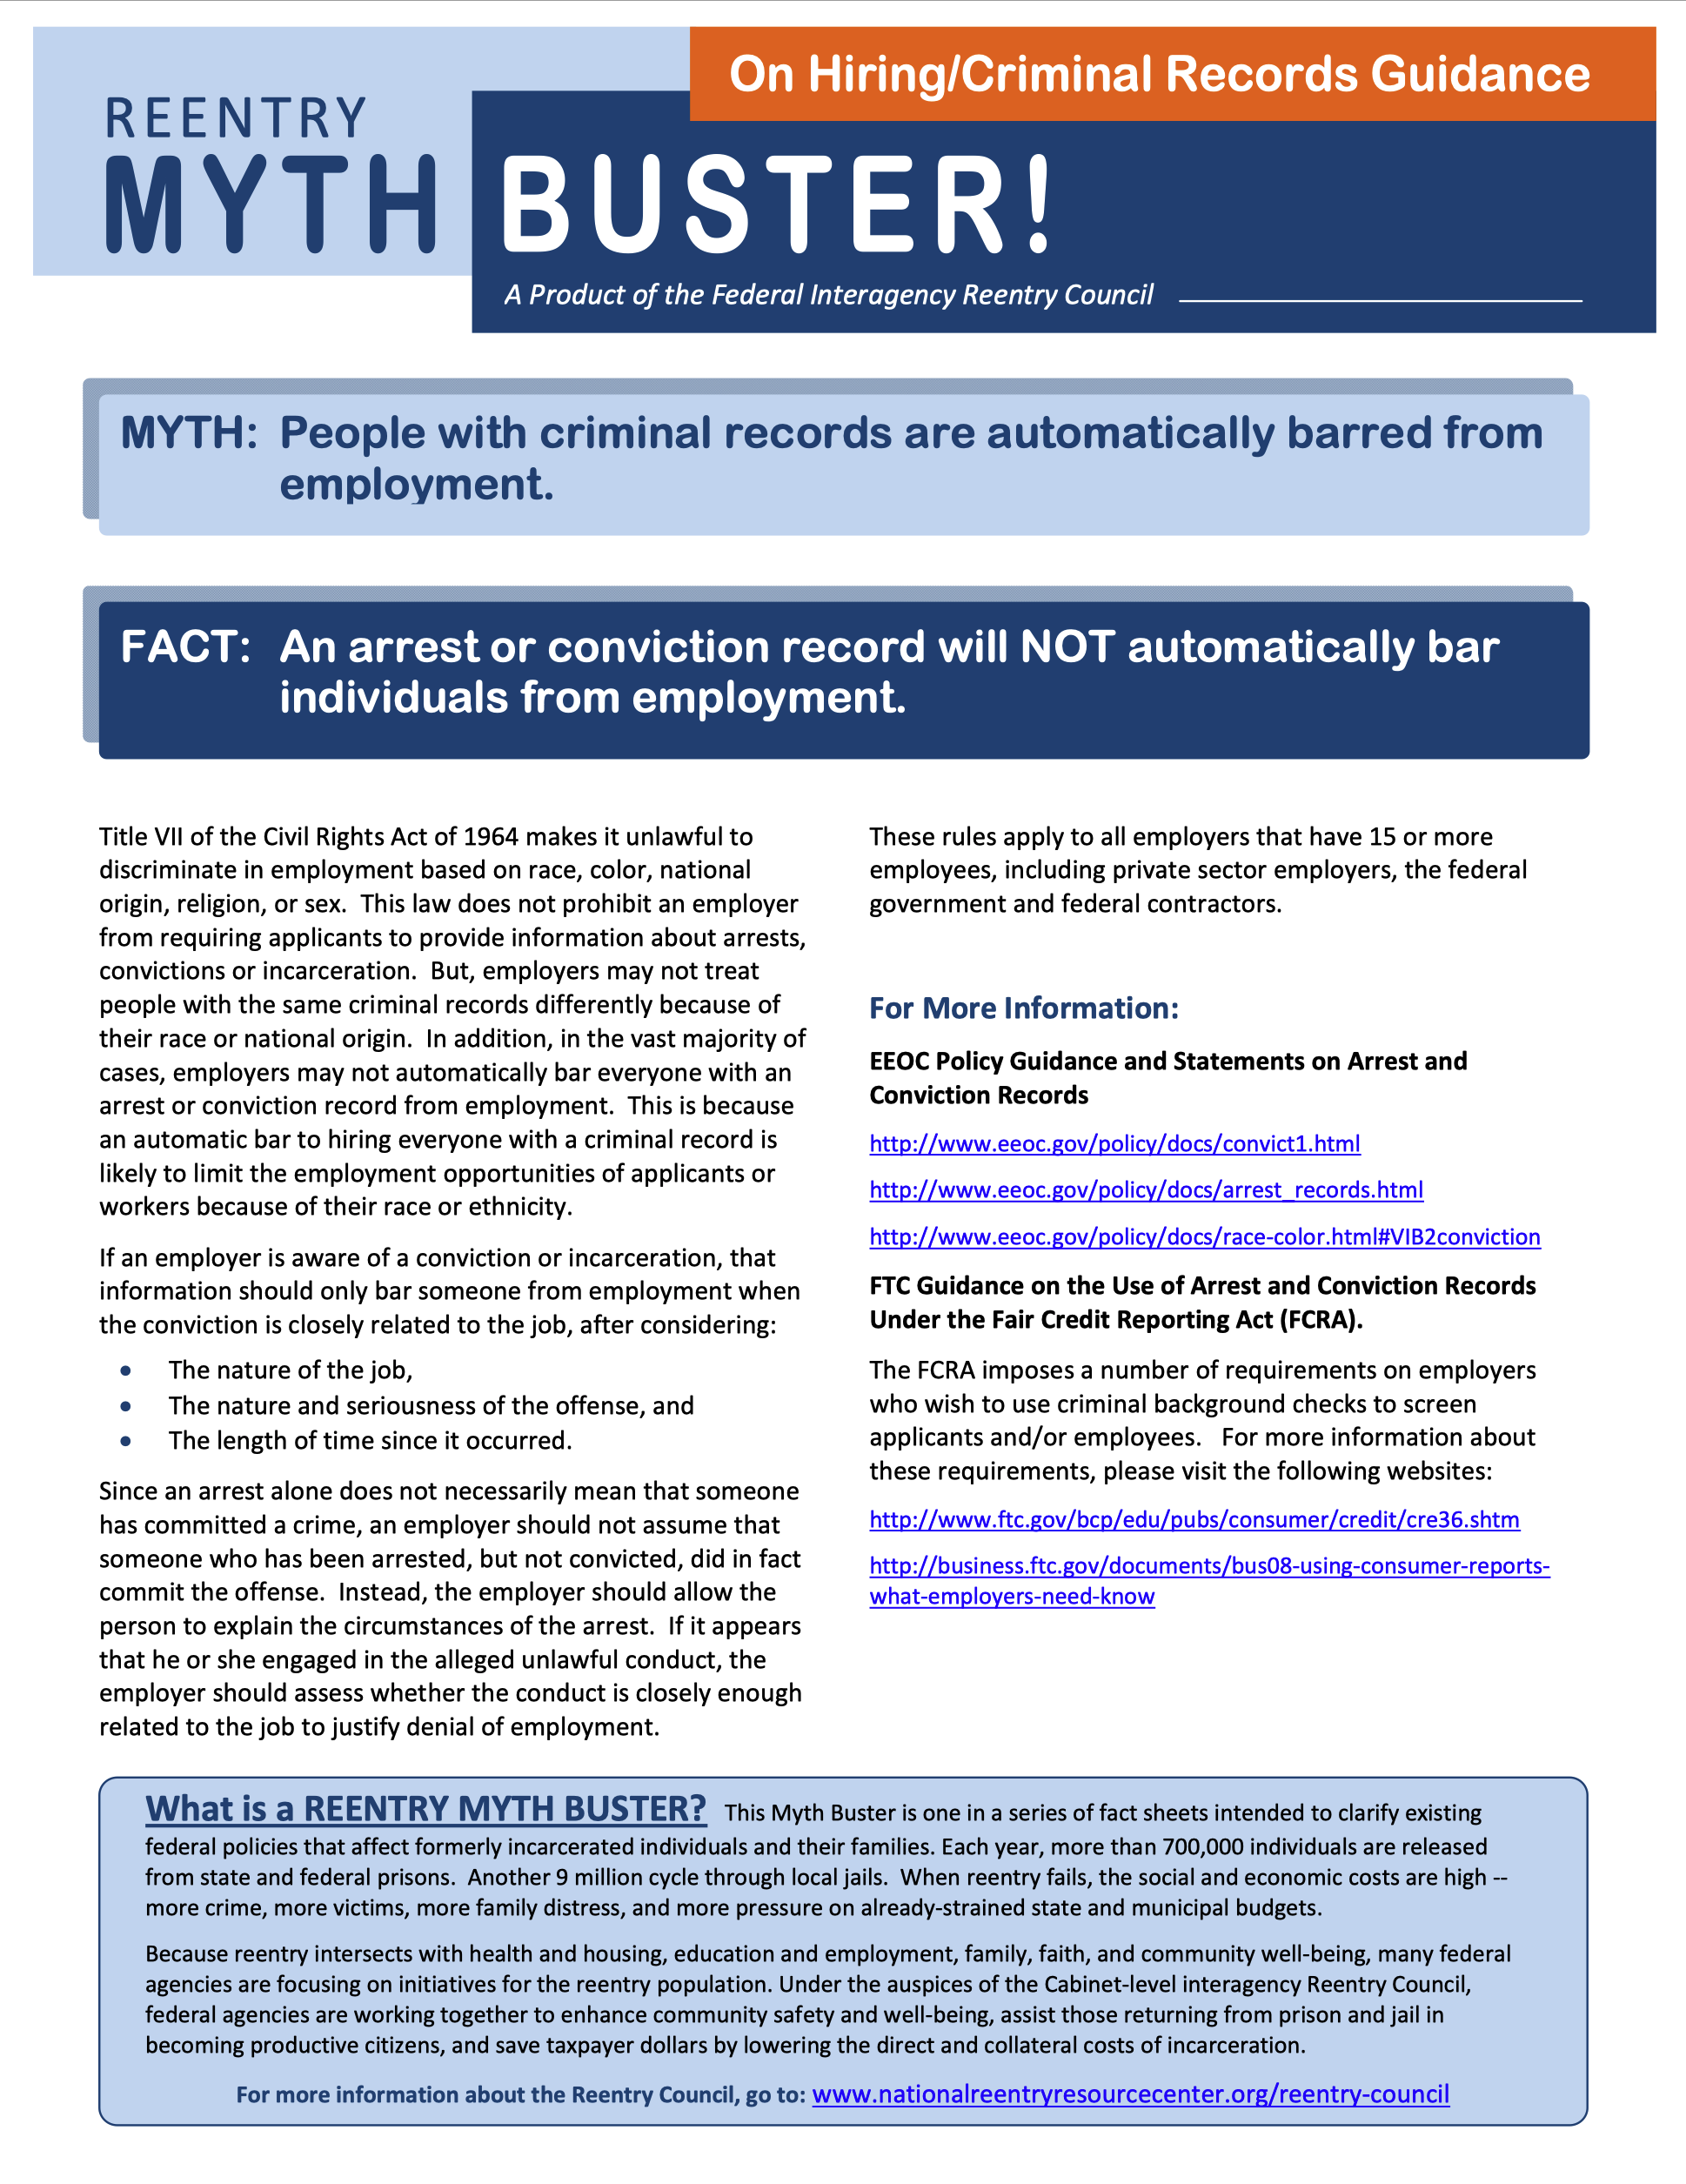 Myth Buster on Hiring/Criminal Records Guidance fact sheet